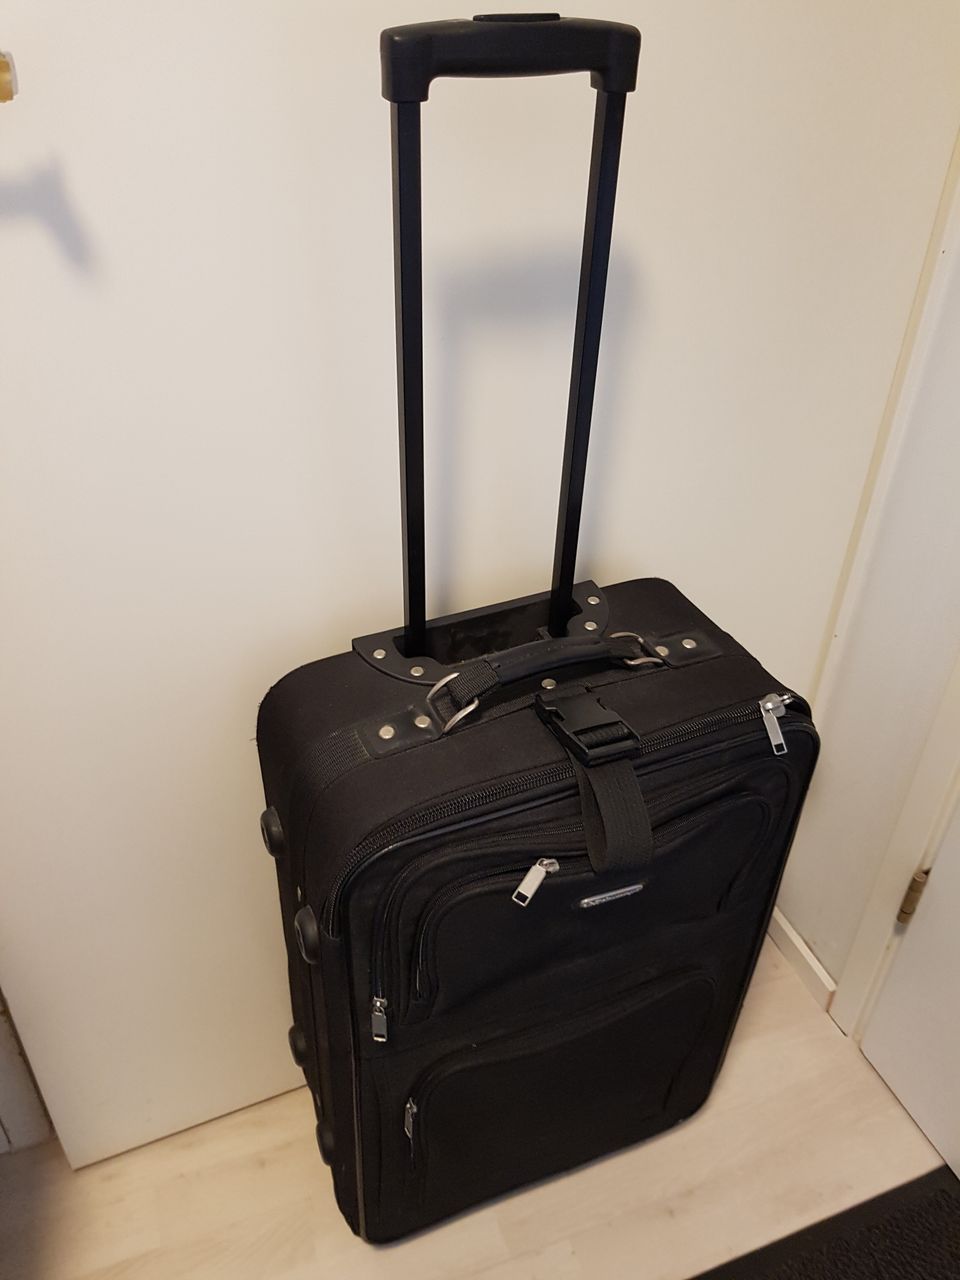 matkalaukku - travel bag  40x55x20cm